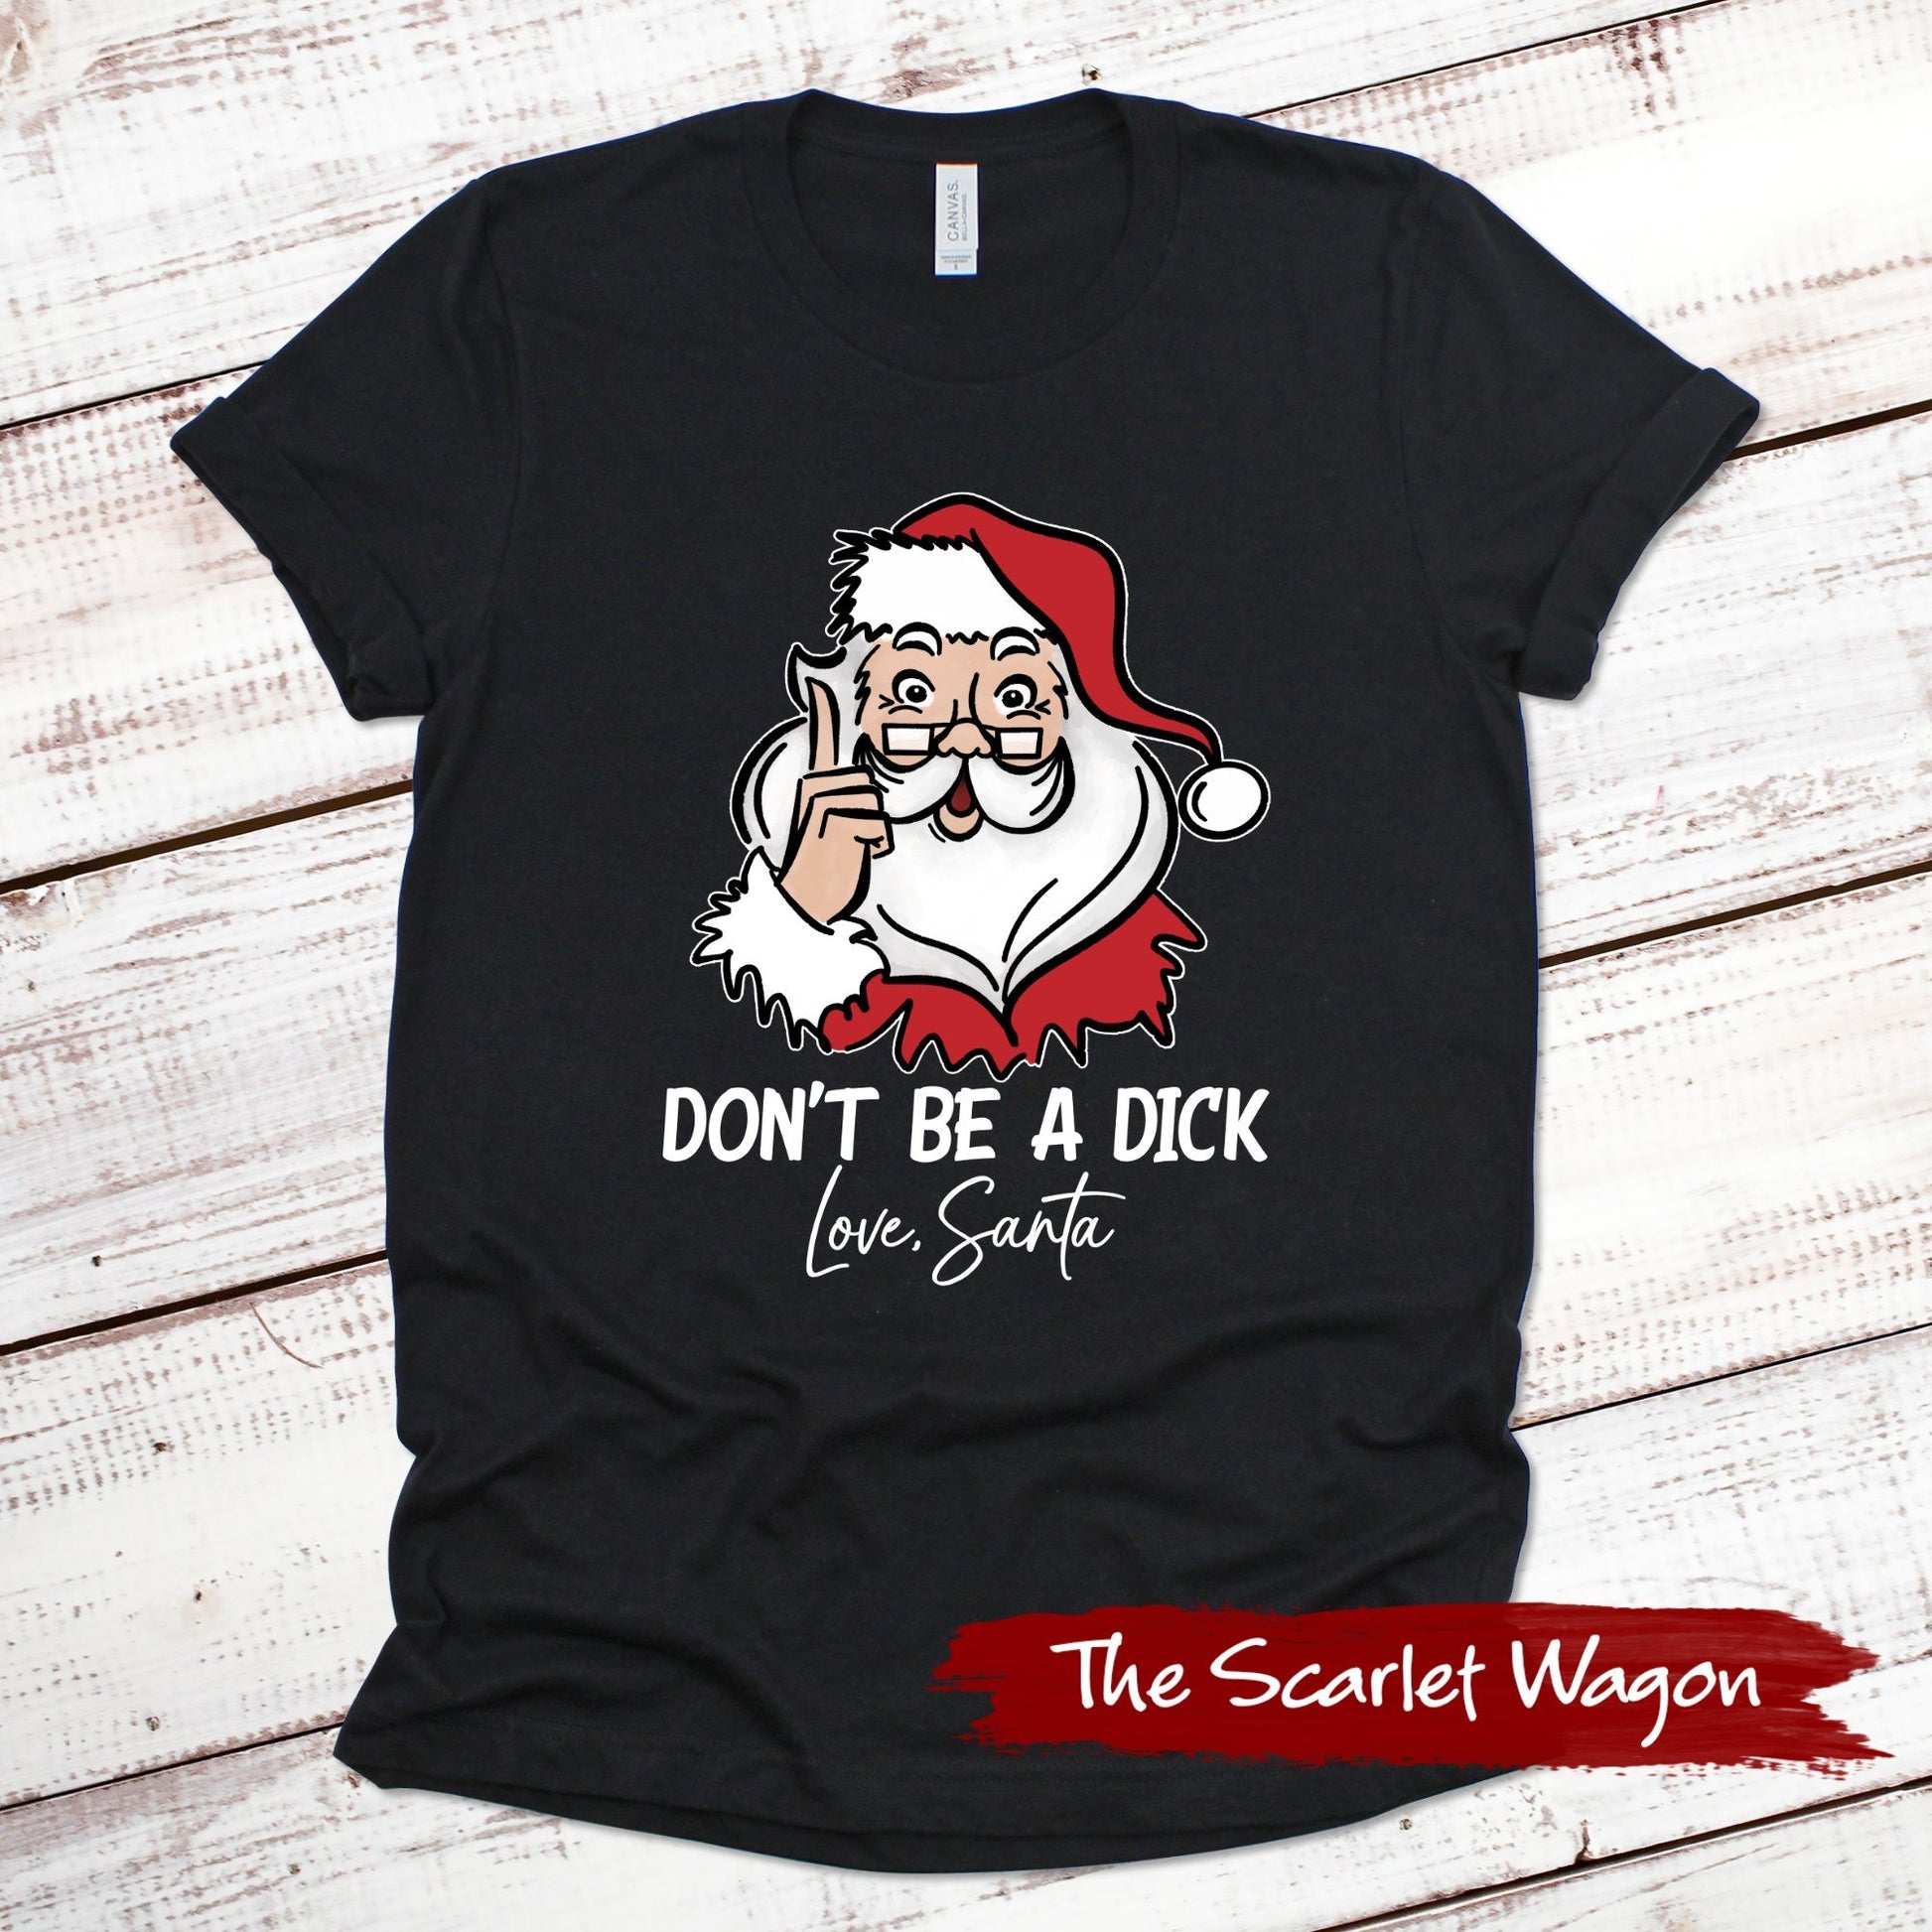 Don't Be a Dick - Love, Santa Christmas Shirt Scarlet Wagon Black XS 